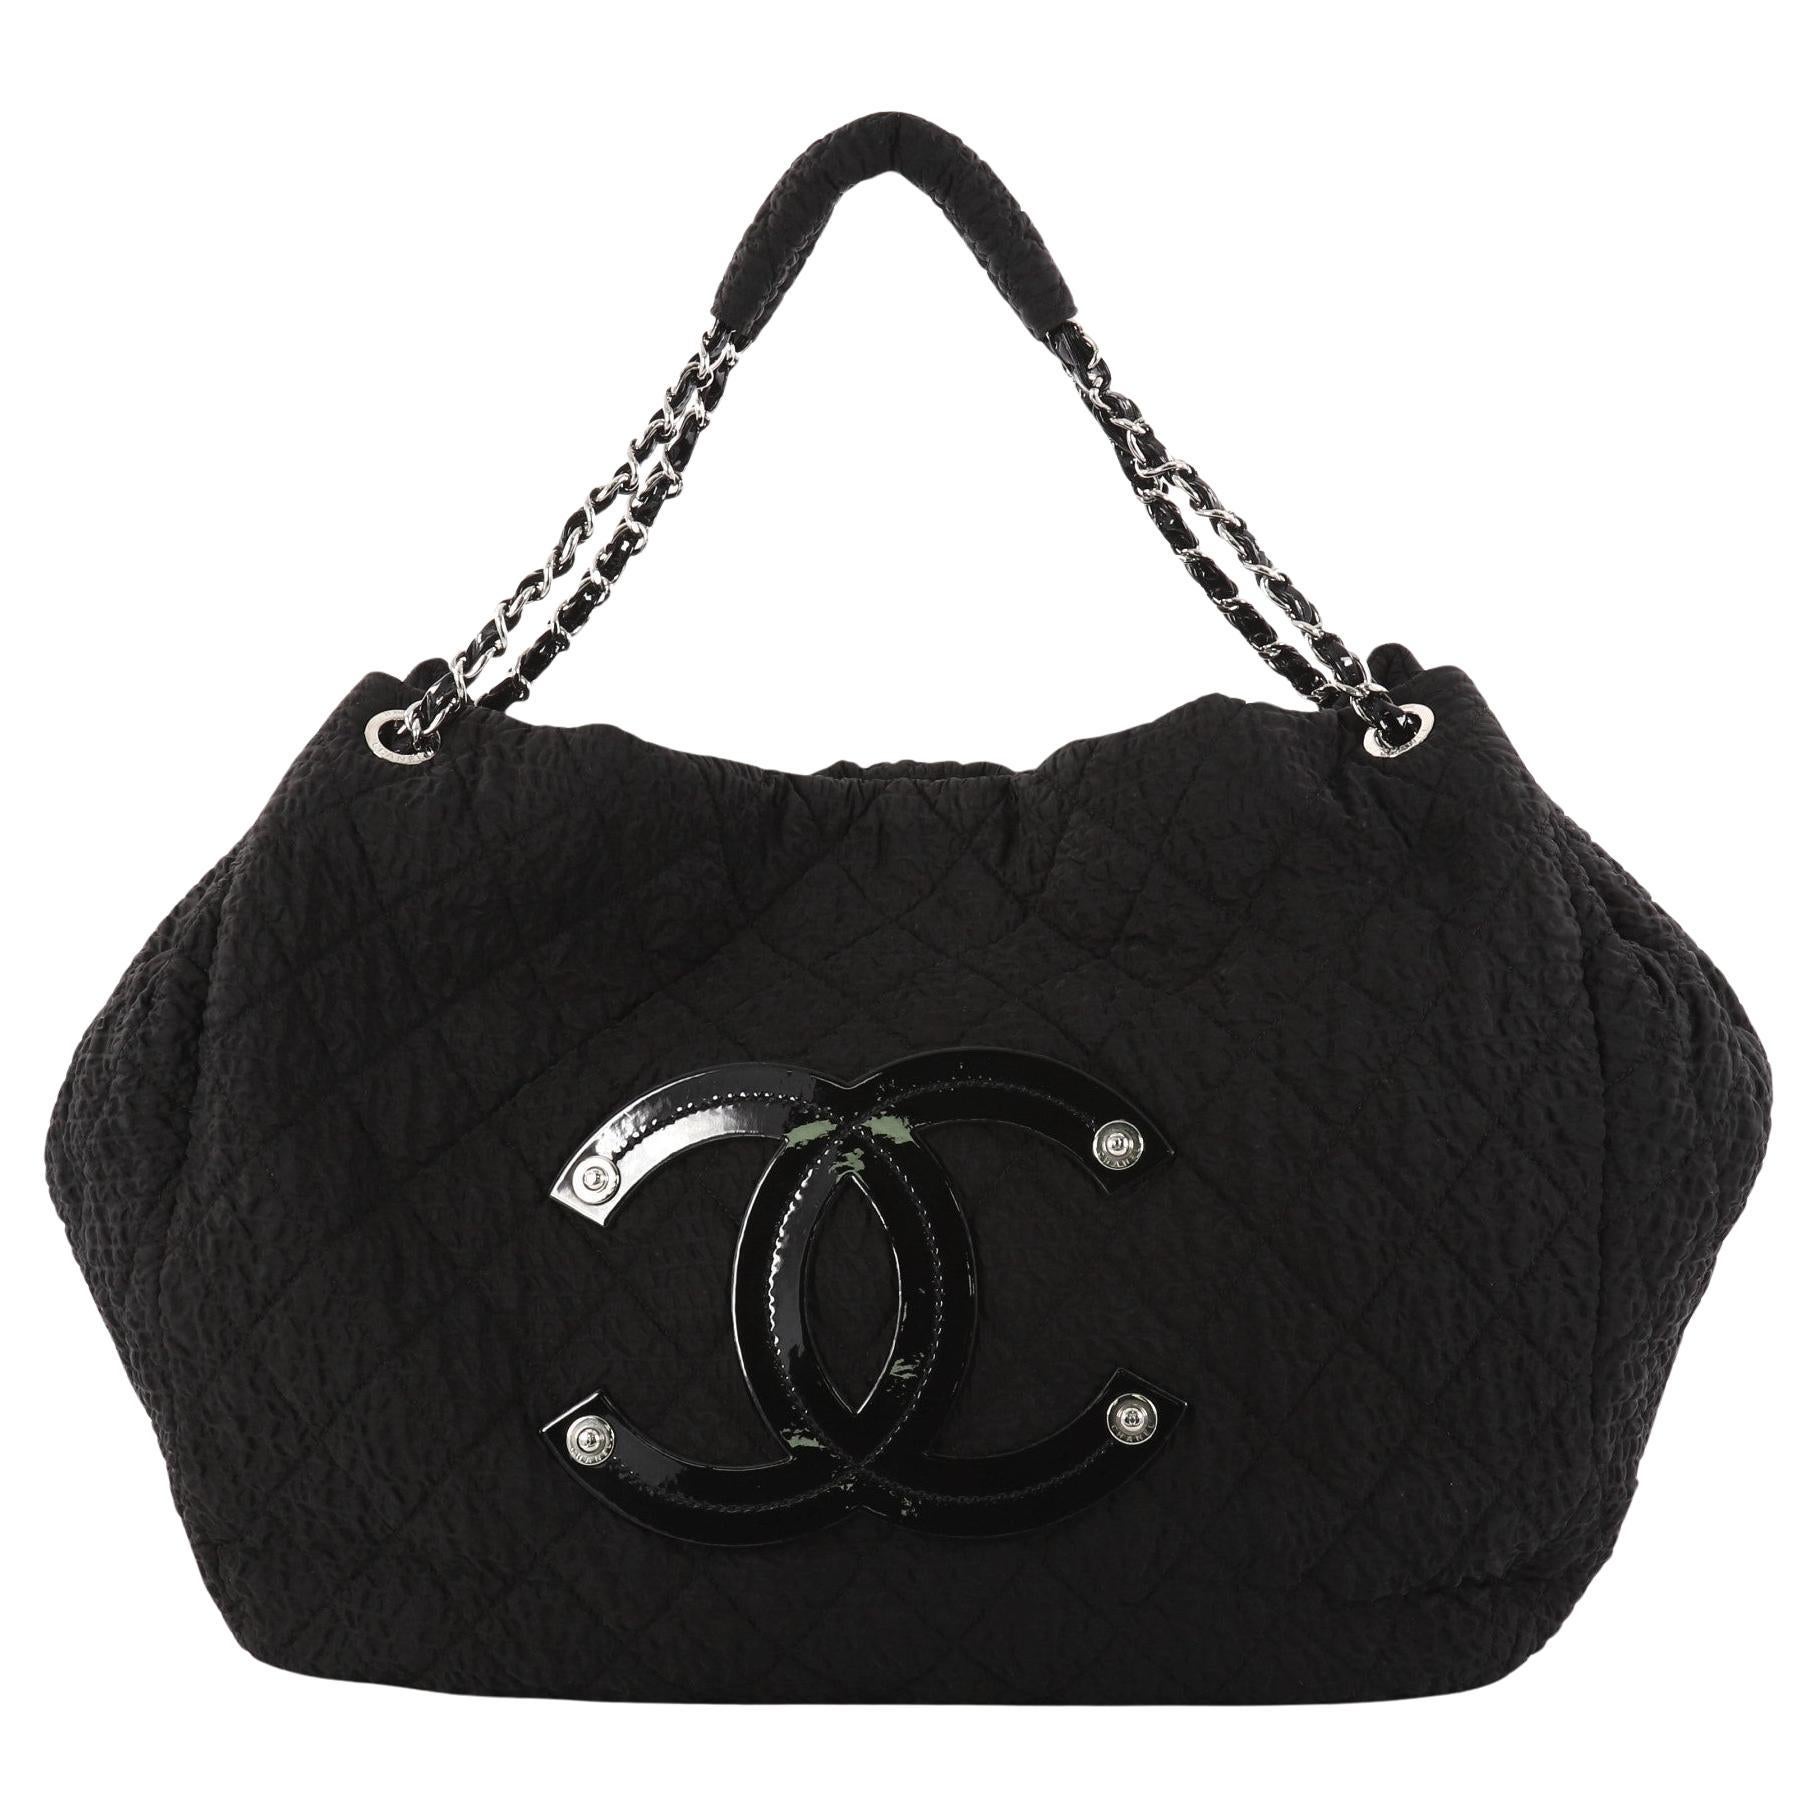 Chanel Coco Cabas Overnight Tote Schwarze Weekend Bag aus Nylon